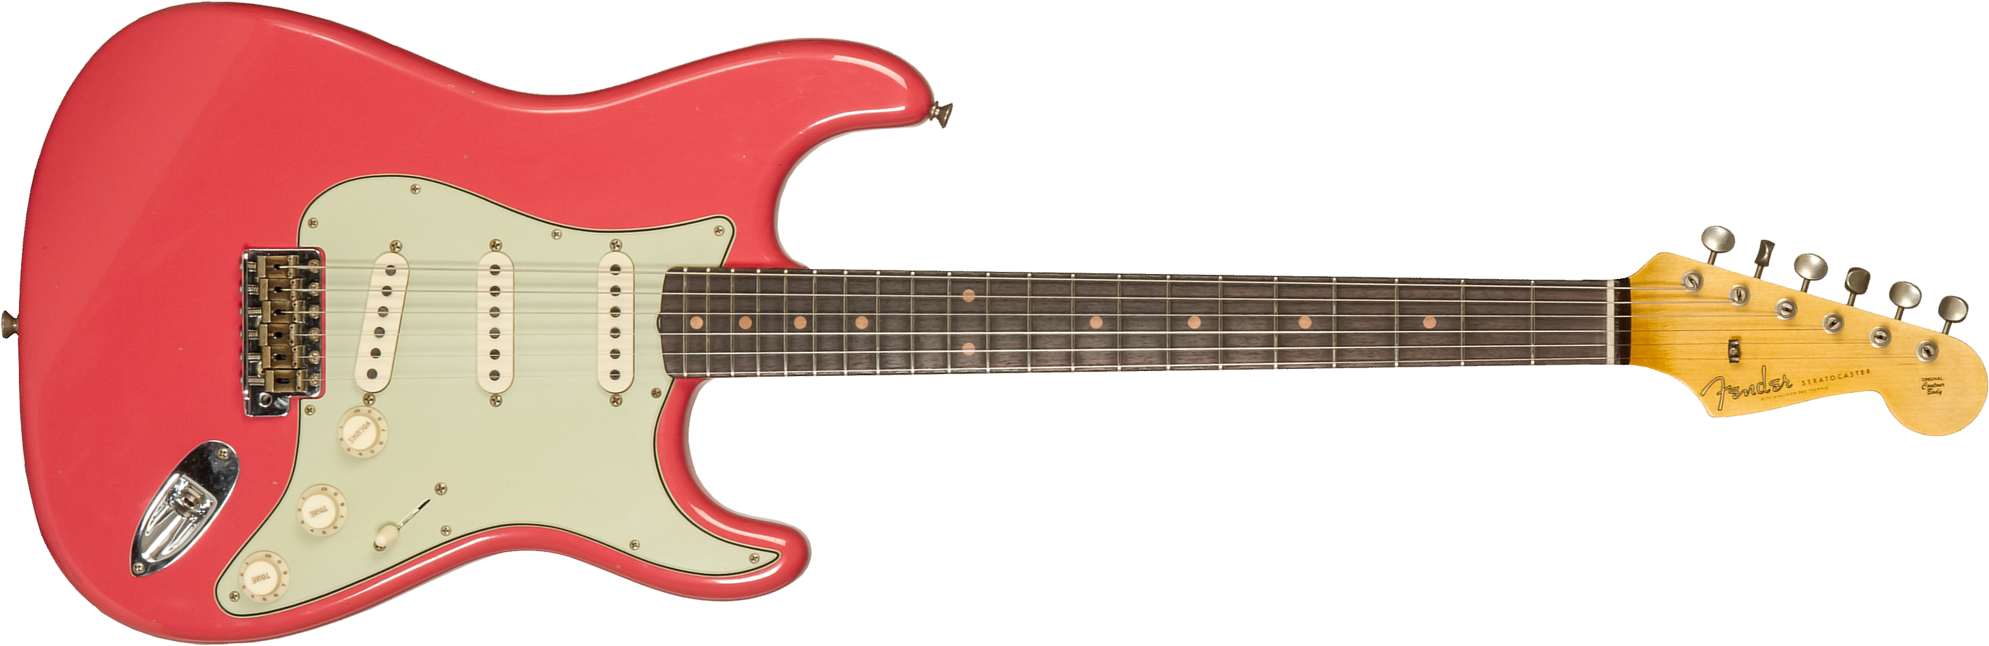 Fender Custom Shop Strat 1959 3s Trem Rw #cz571088 - Journeyman Relic Aged Fiesta Red - E-Gitarre in Str-Form - Main picture